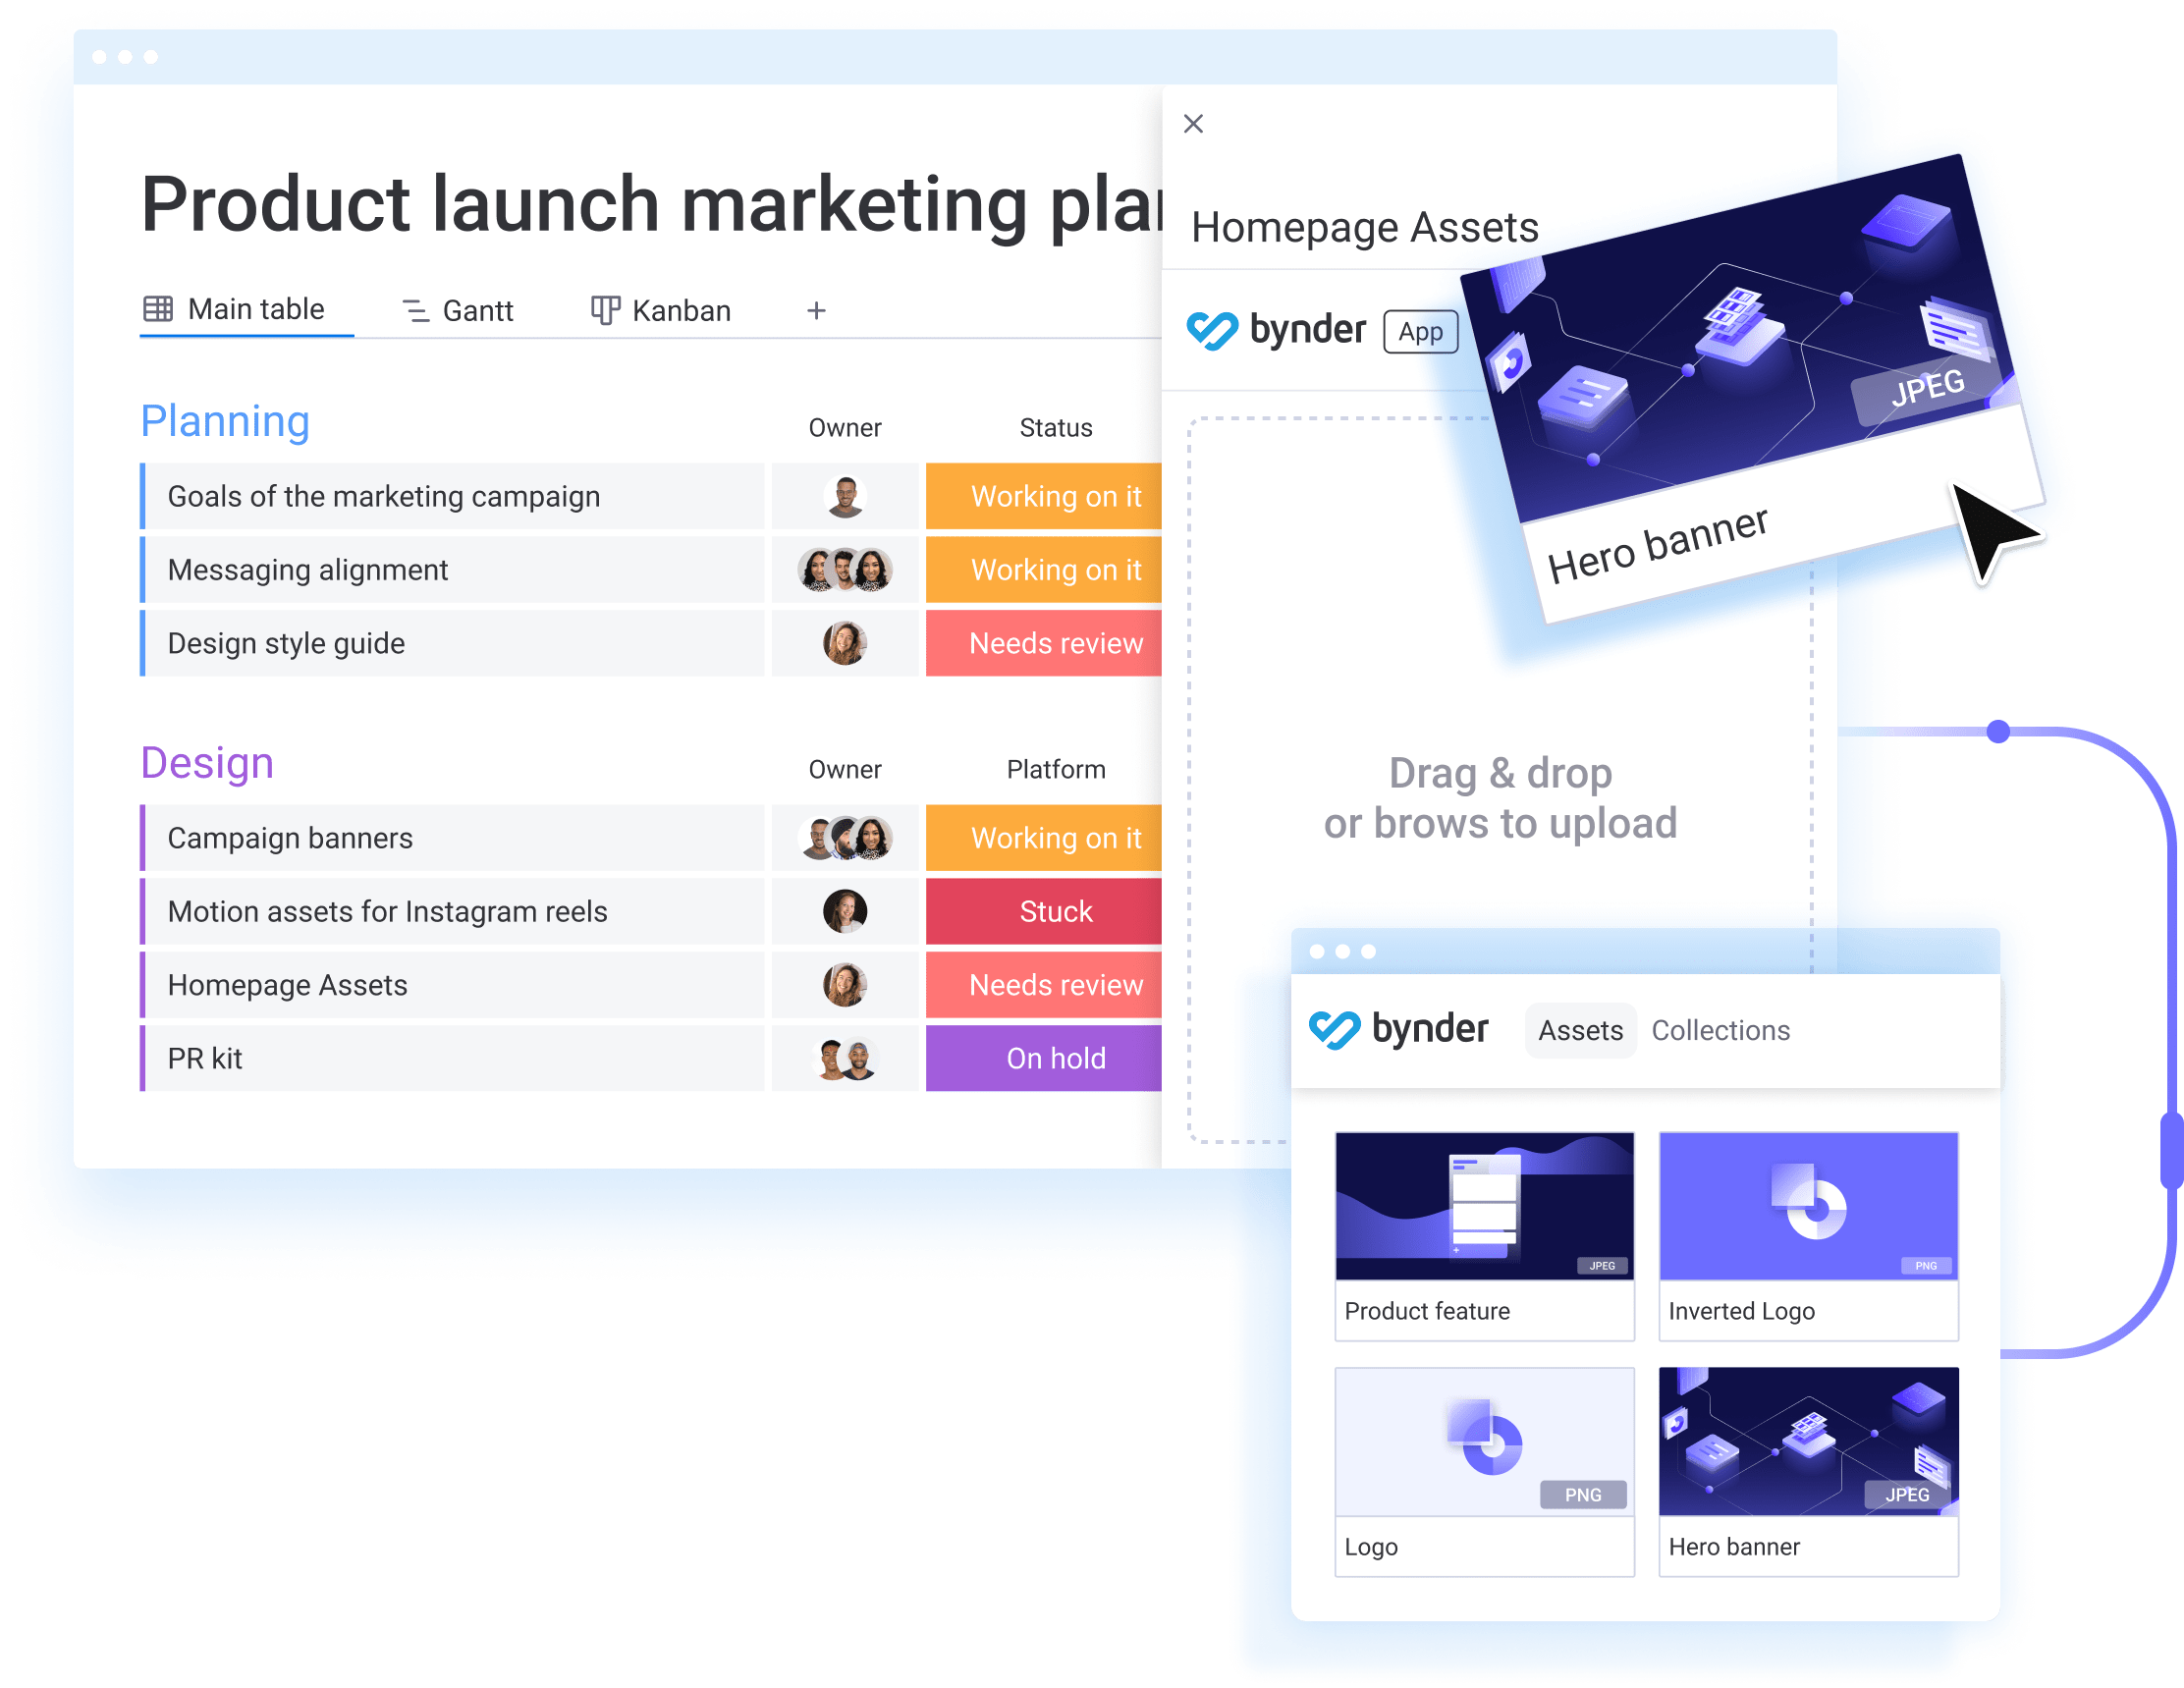 Bynder marketing workflow on one platform